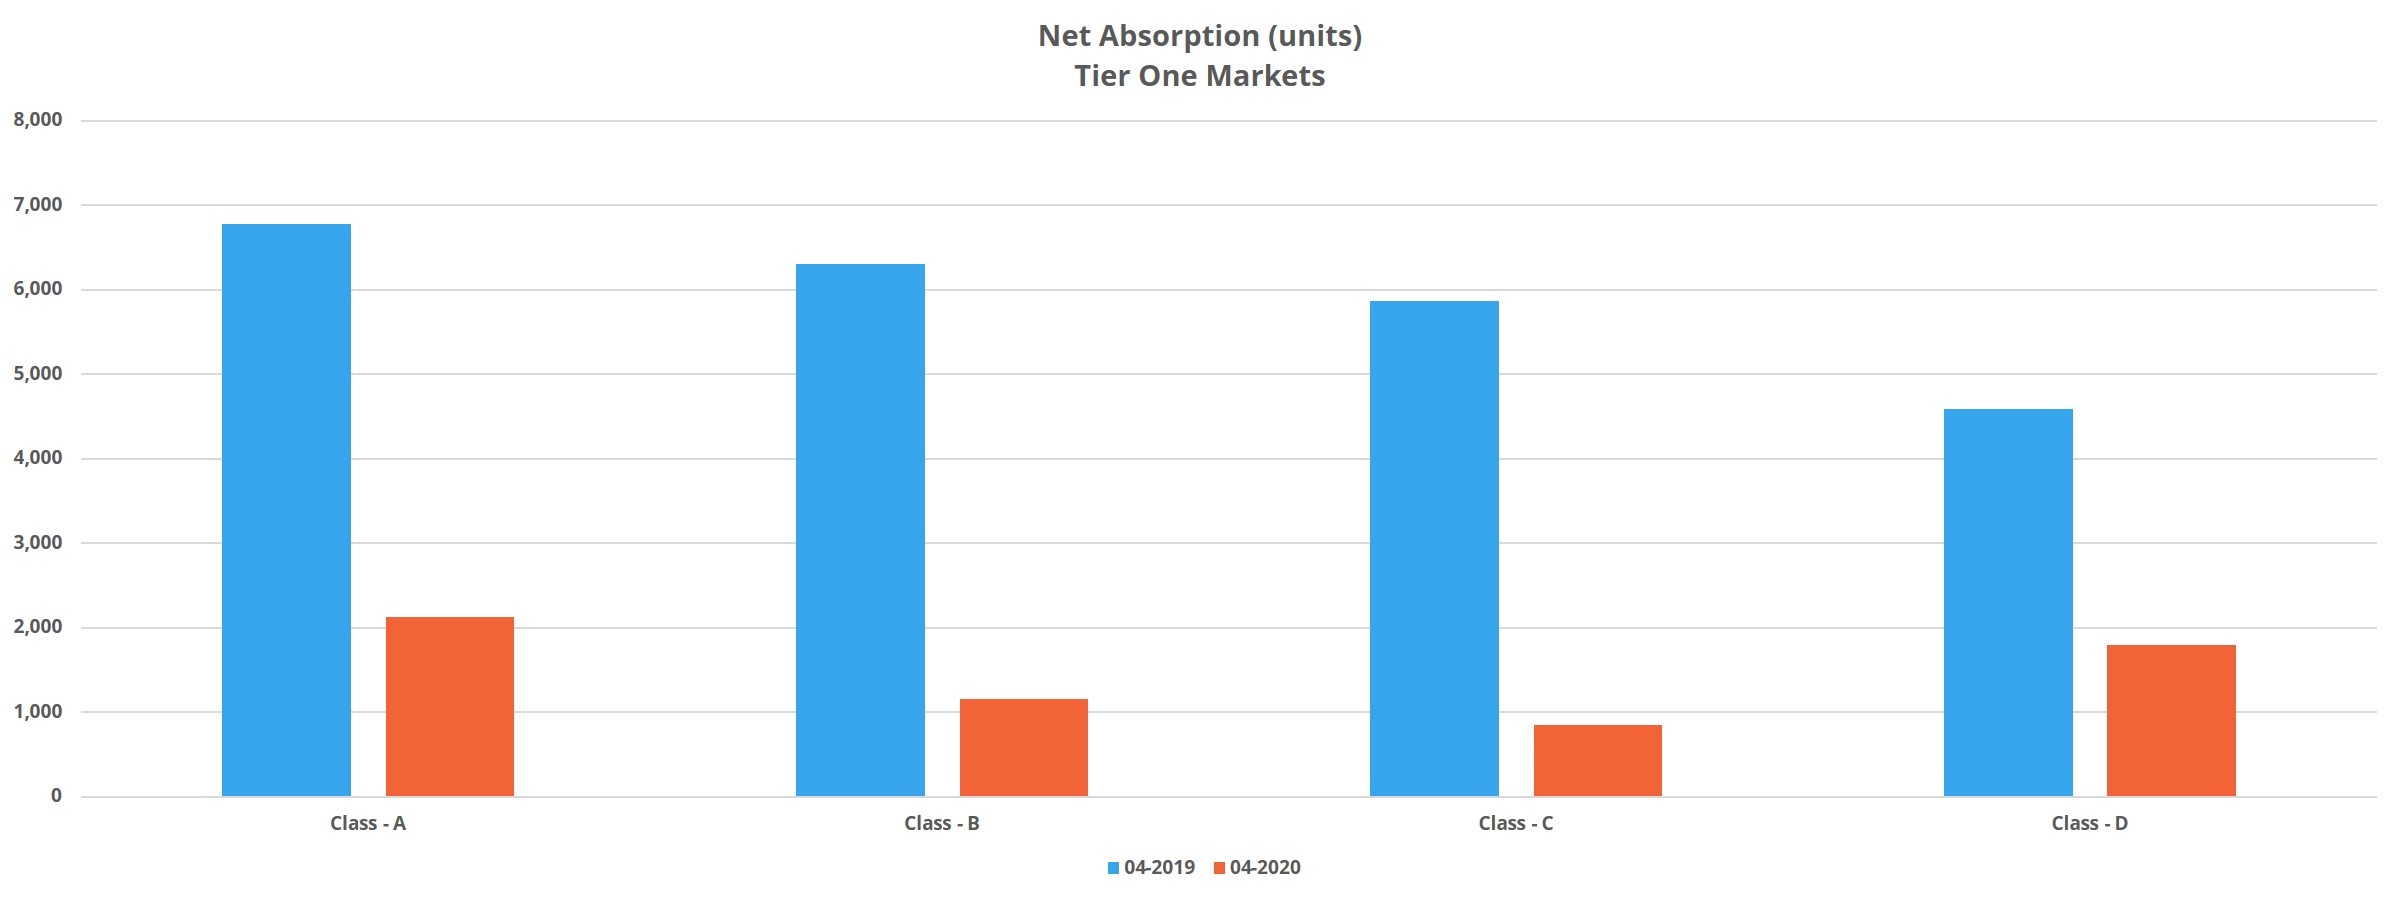 Net Absorption (units) Tier One Markets